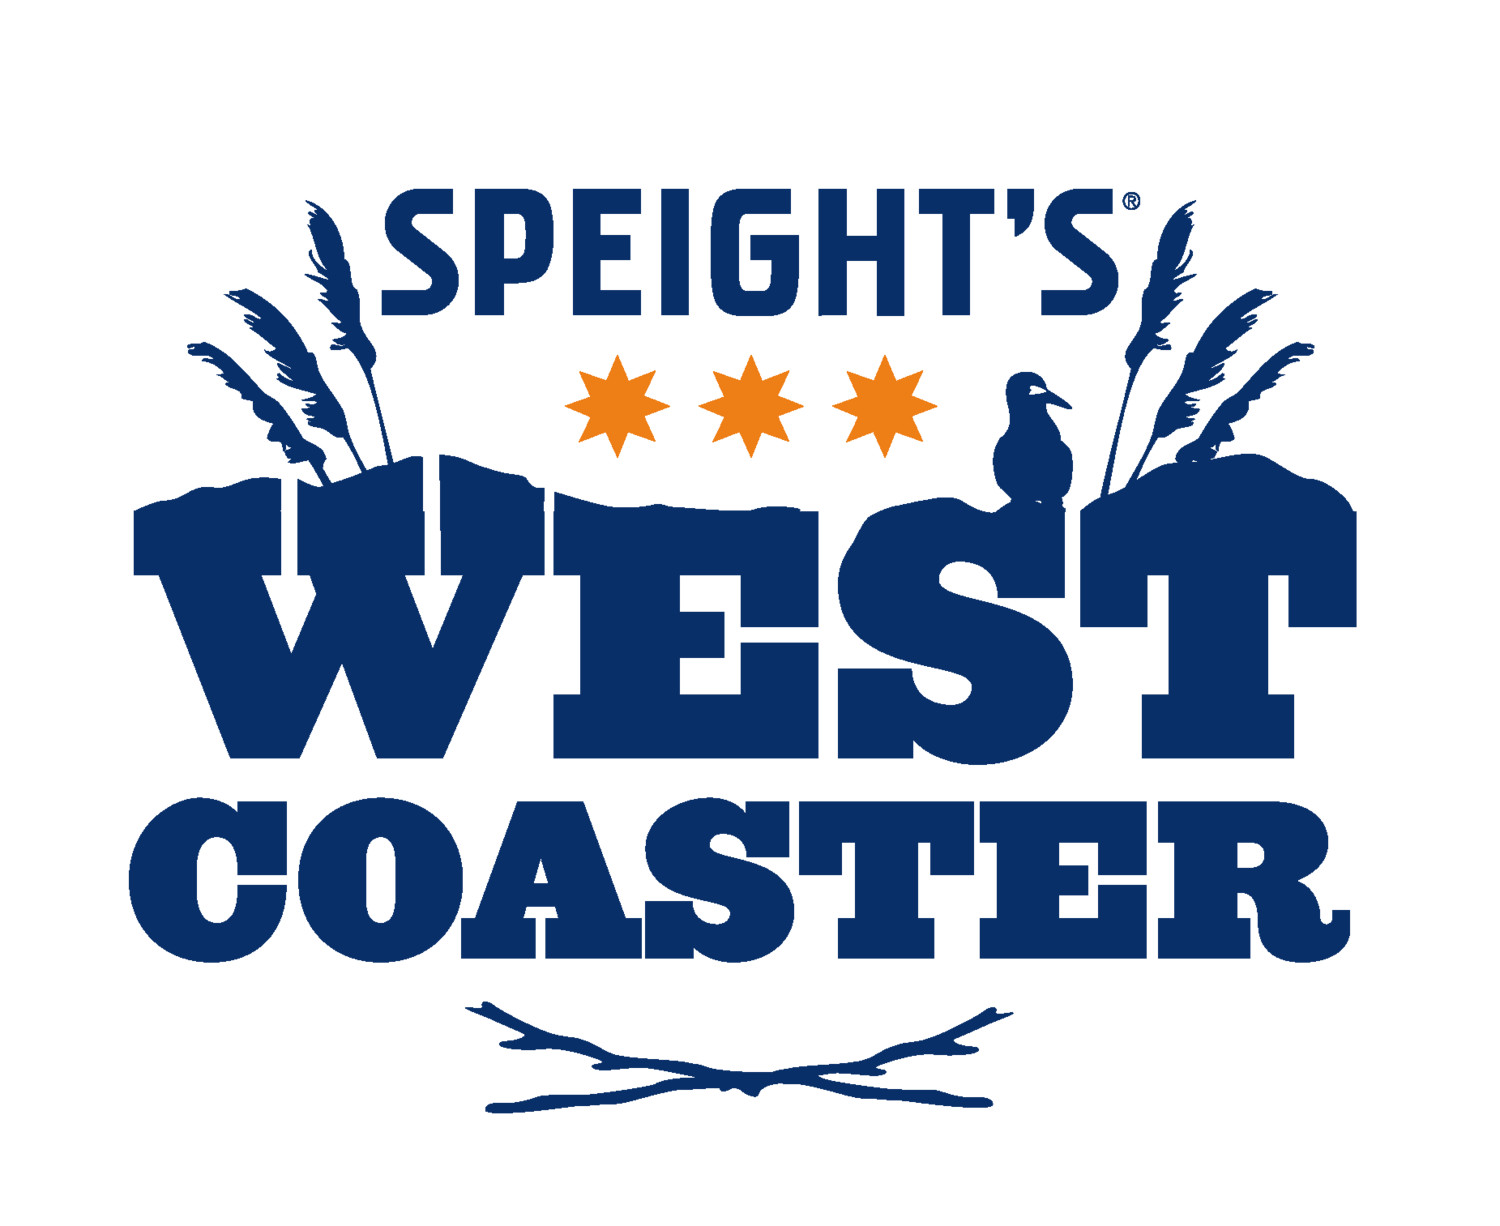 Speight's West Coaster